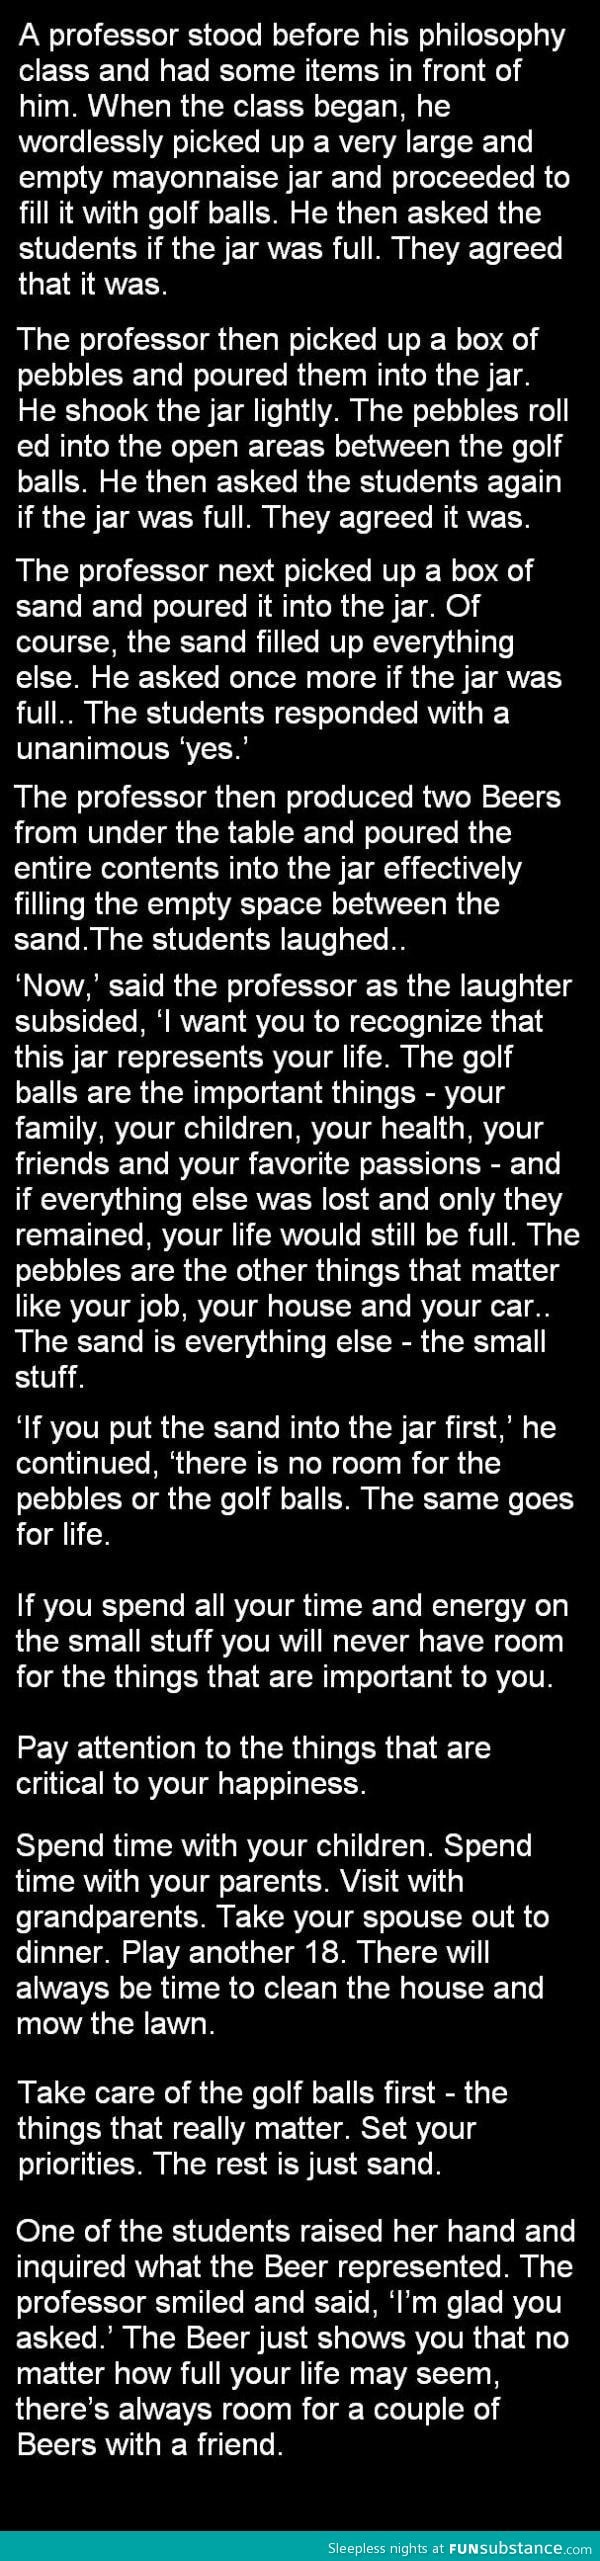 Take care of the golf balls - FunSubstance